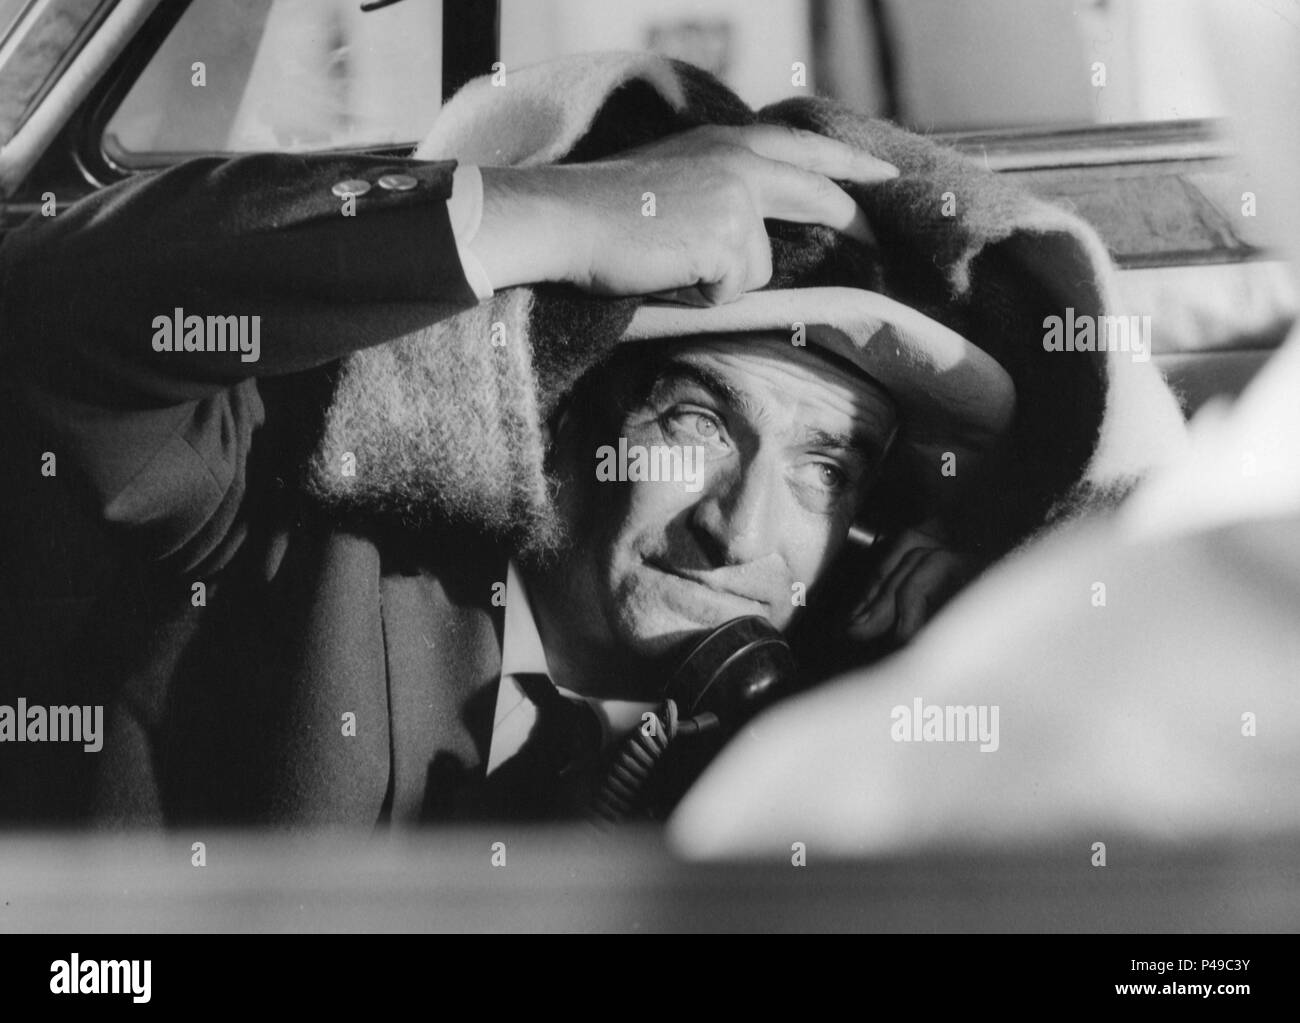 Original Film Title: LA GRANDE VADROUILLE. English Title: DON'T LOOK NOW,  WE'VE BEEN SHOT AT. Film Director: GERARD OURY. Year: 1966. Stars: LOUIS DE  FUNES; BOURVIL. Credit: LES FILMS CORONA / Album